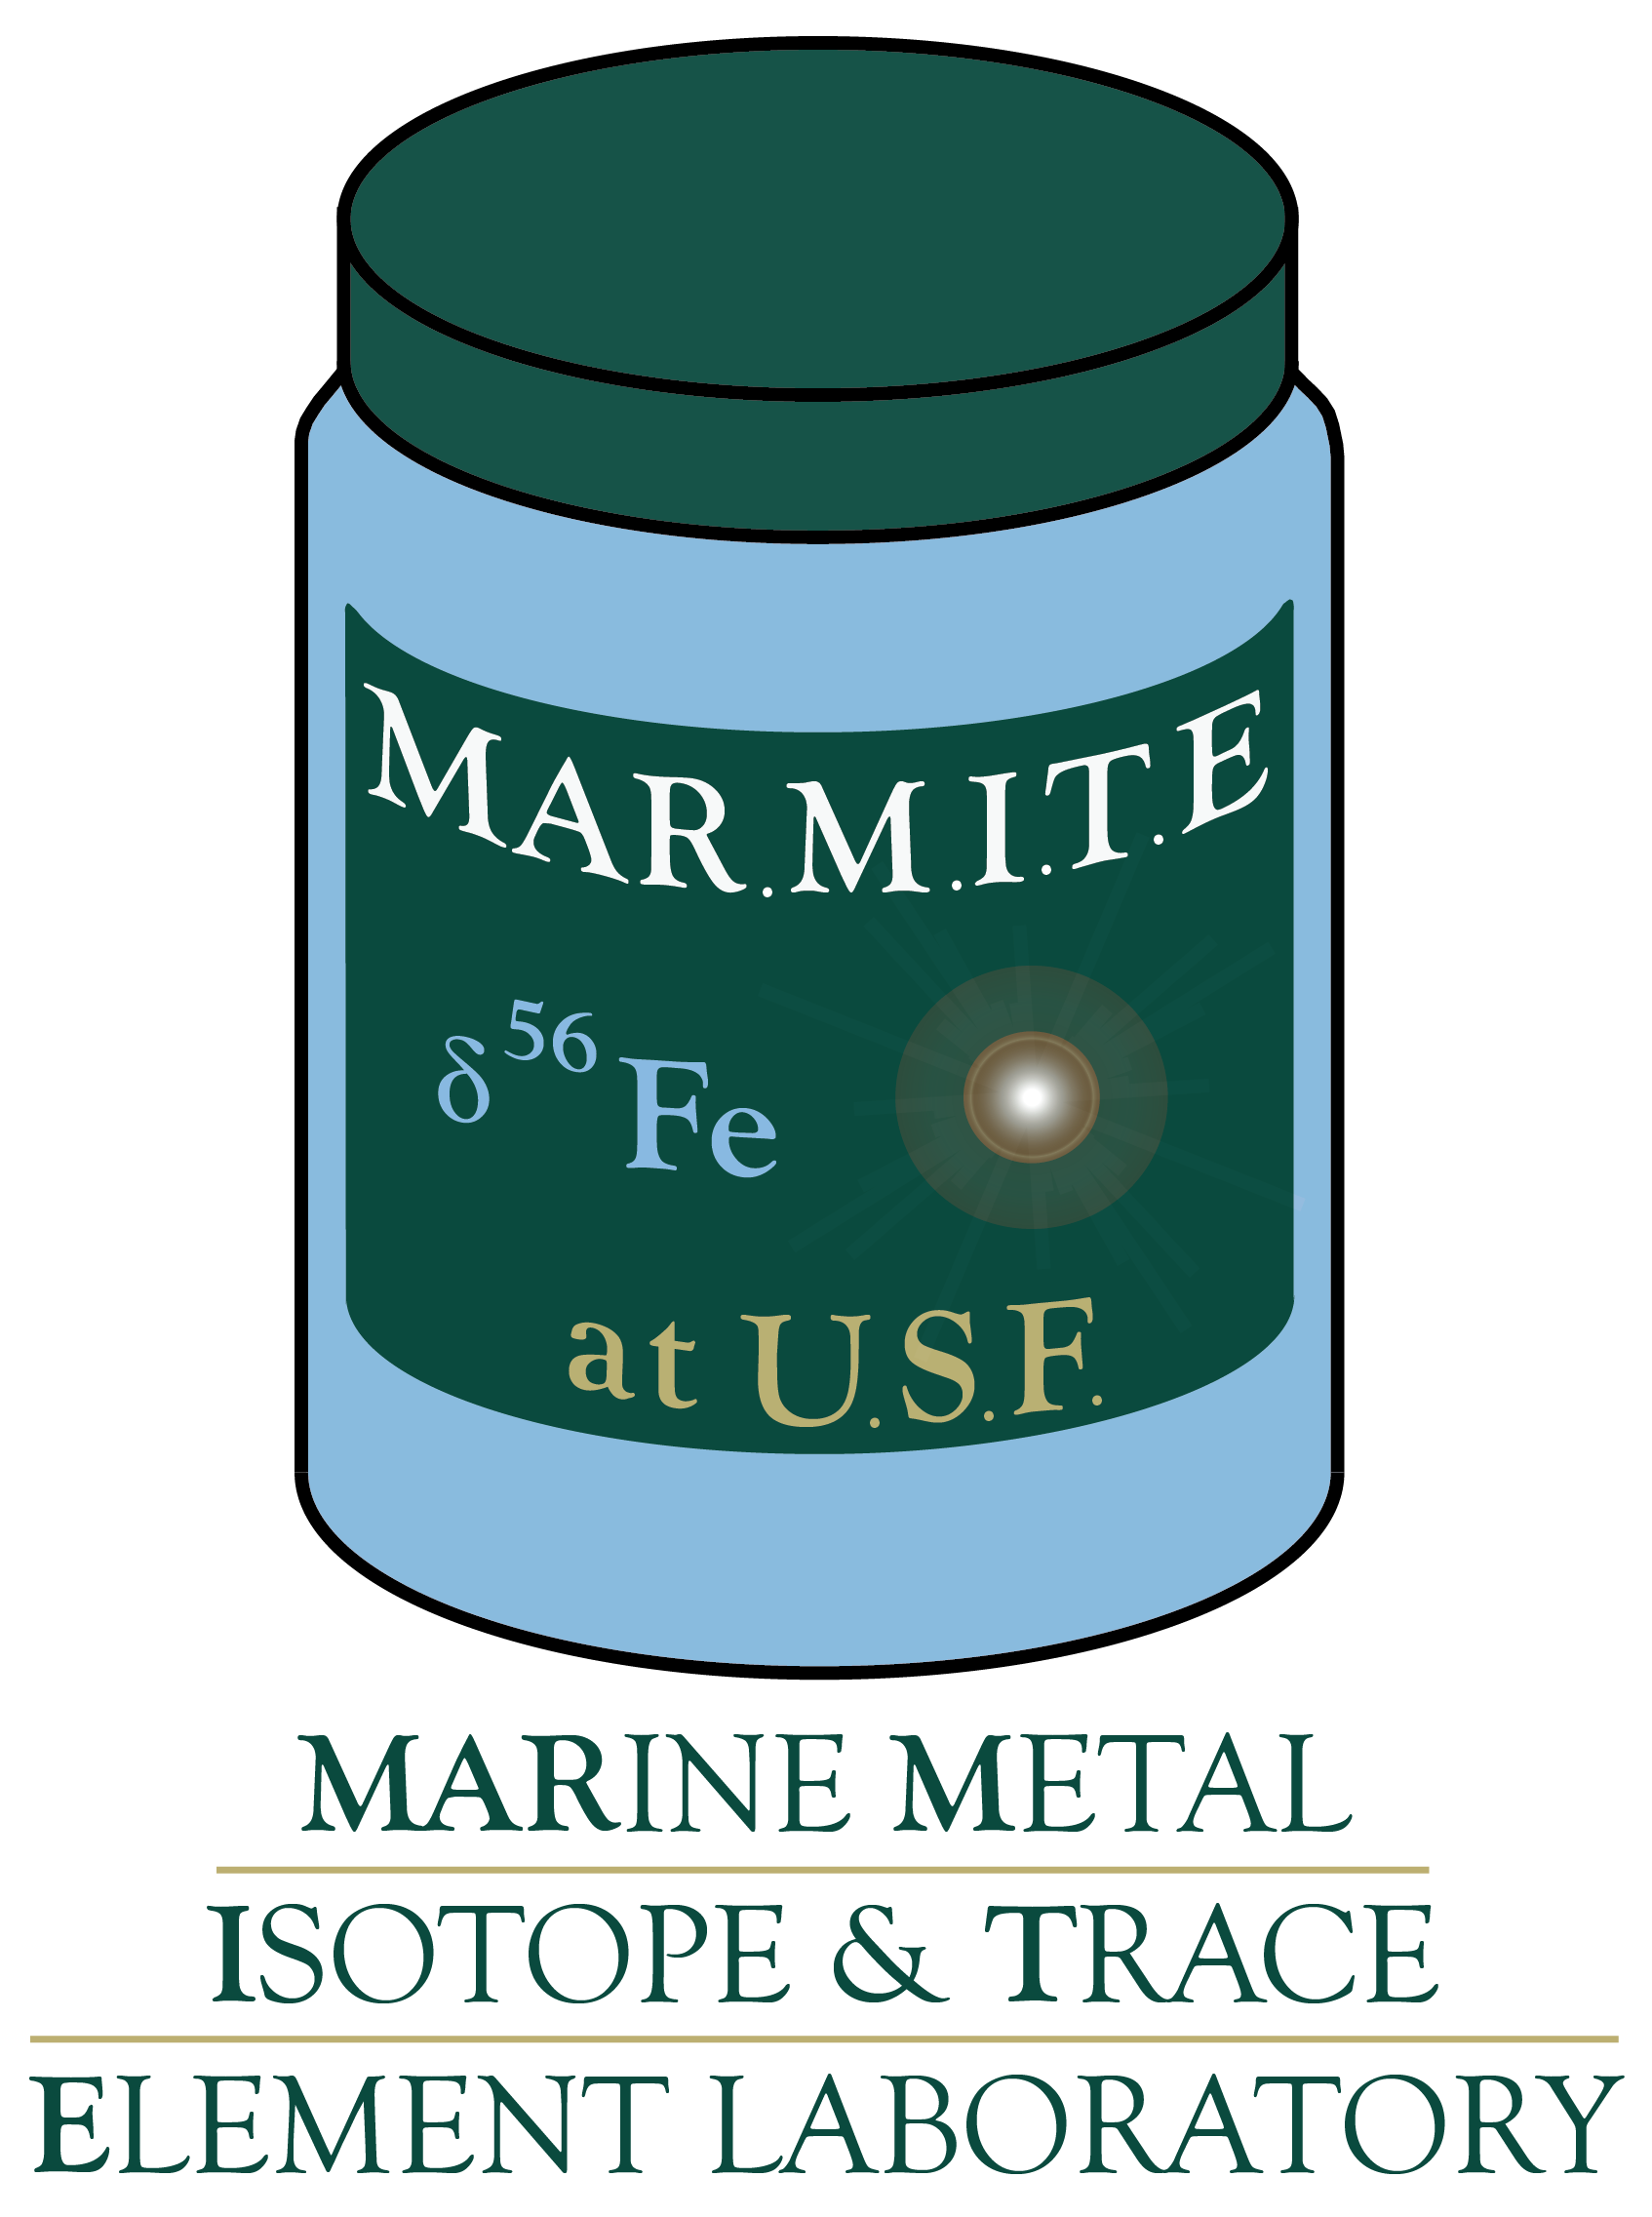 Marine Metal Isotope & Trace Element Laboratory logo